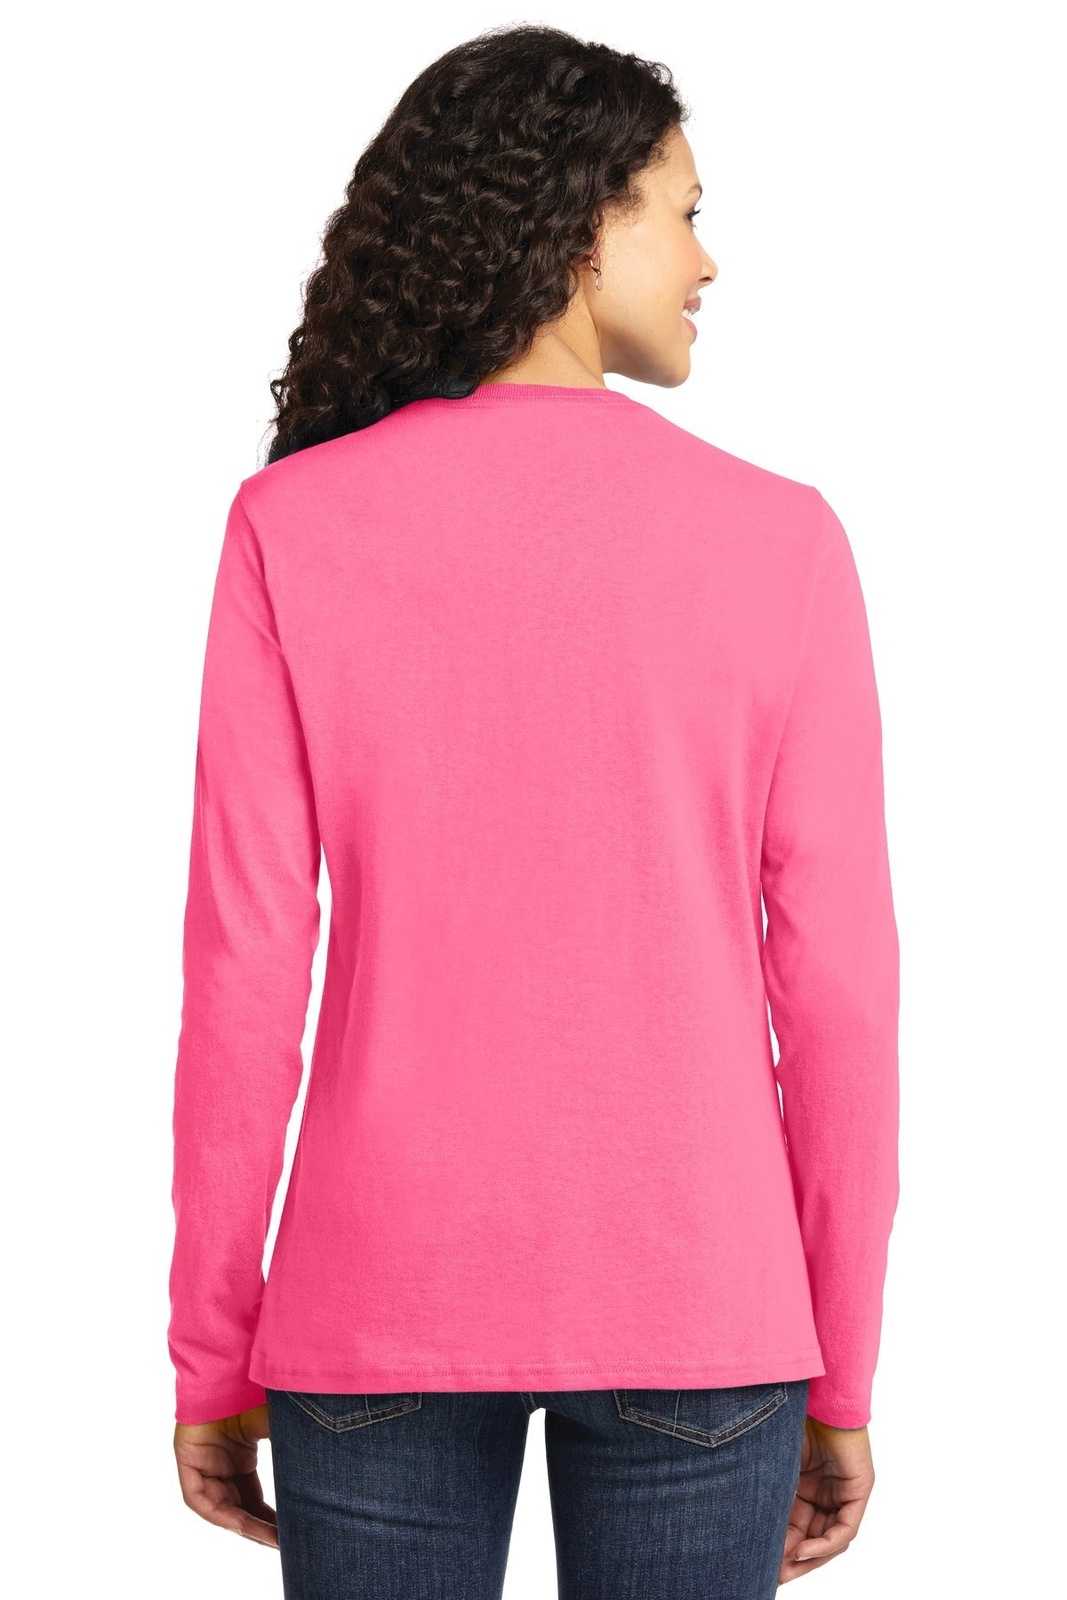 Port & Company LPC54LS Ladies Long Sleeve Core Cotton Tee - Neon Pink - HIT a Double - 1